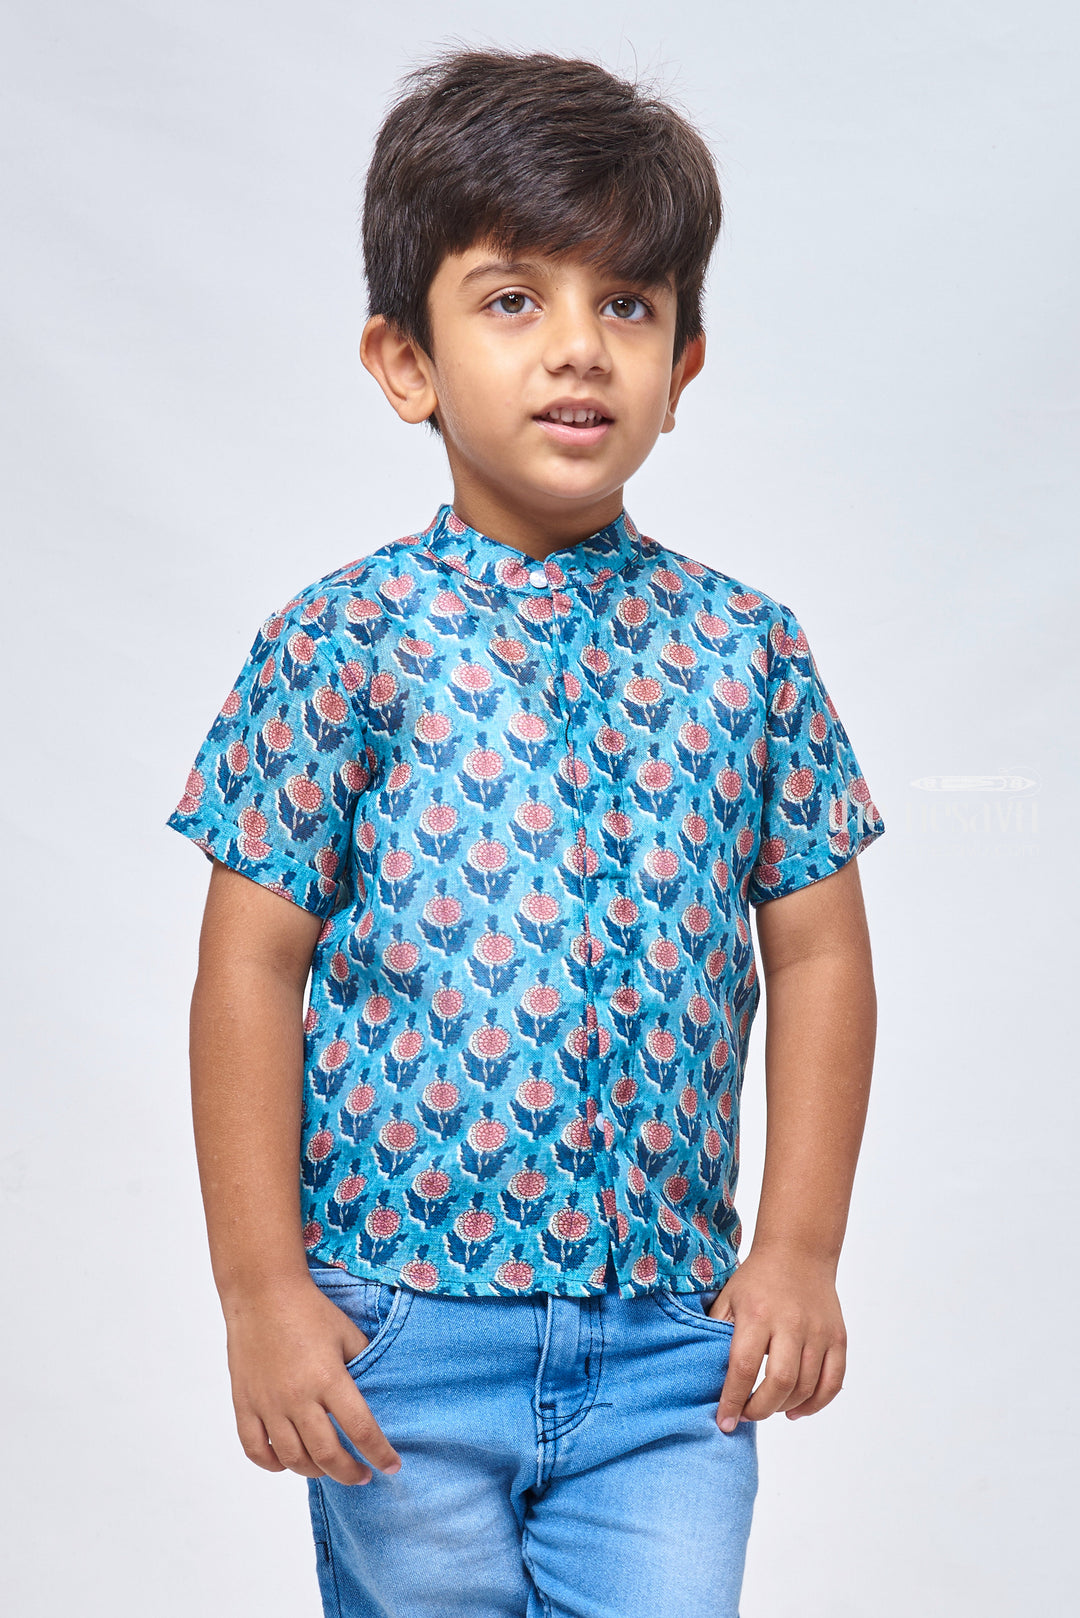 The Nesavu Boys Linen Shirt Linen Blossoms: Floral Print Boys' Shirt for a Cool and Comfortable Summer Vibe Nesavu 14 (6M) / Green / Linen BS055-14 Floral Printed Shirt for Boys | Boy Baby shirts | The Nesavu